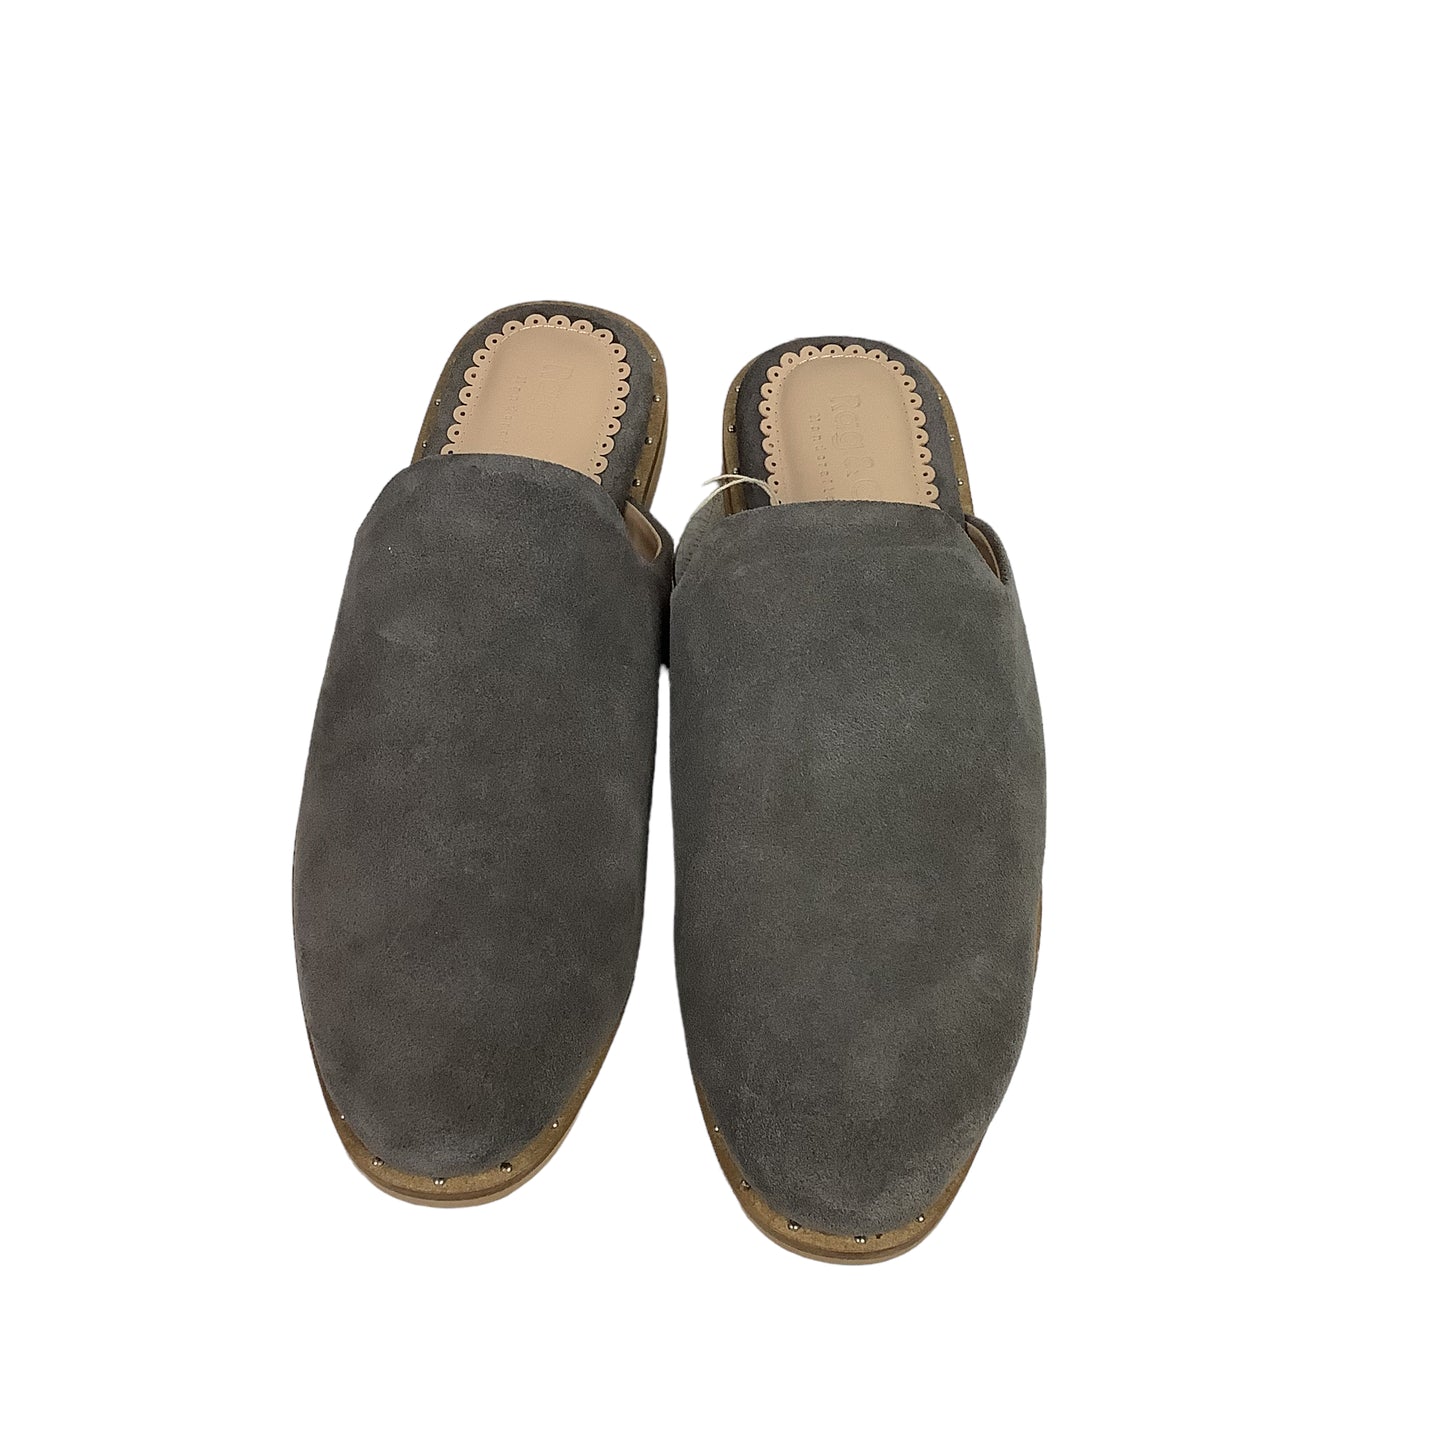 Shoes Flats Mule & Slide By Cmc  Size: 9